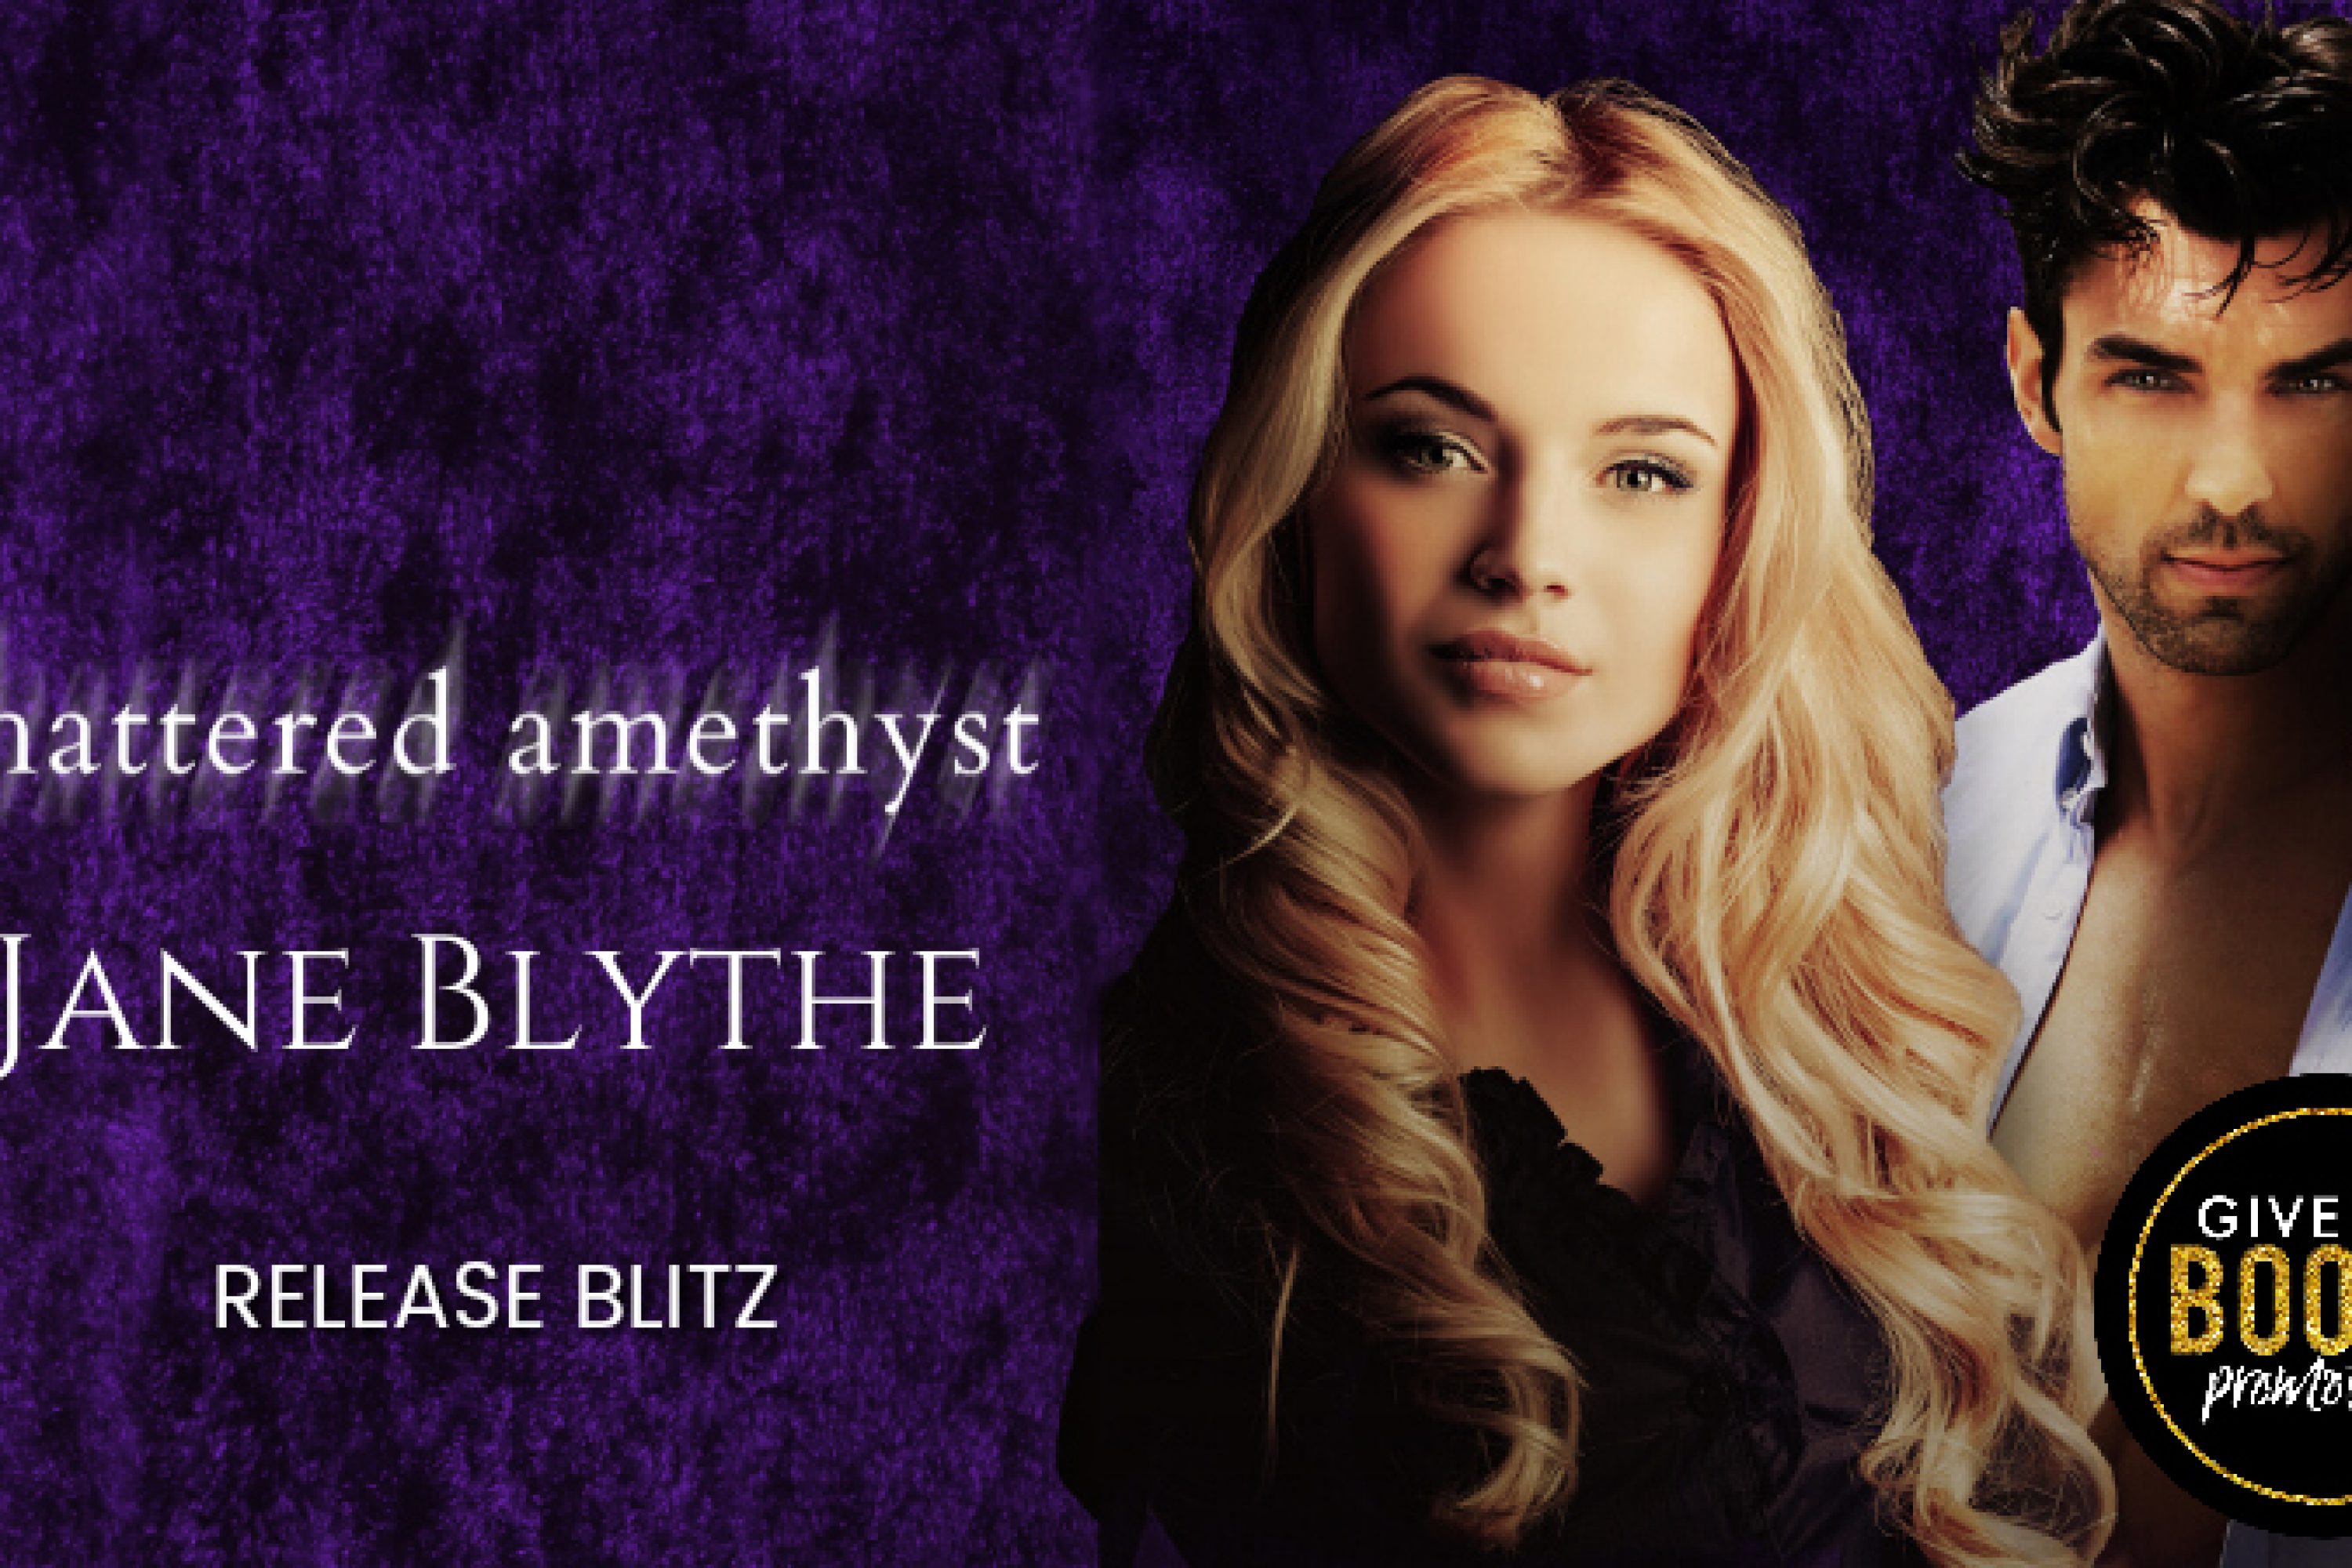 Release Blitz: Shattered Amethyst by Jane Blythe